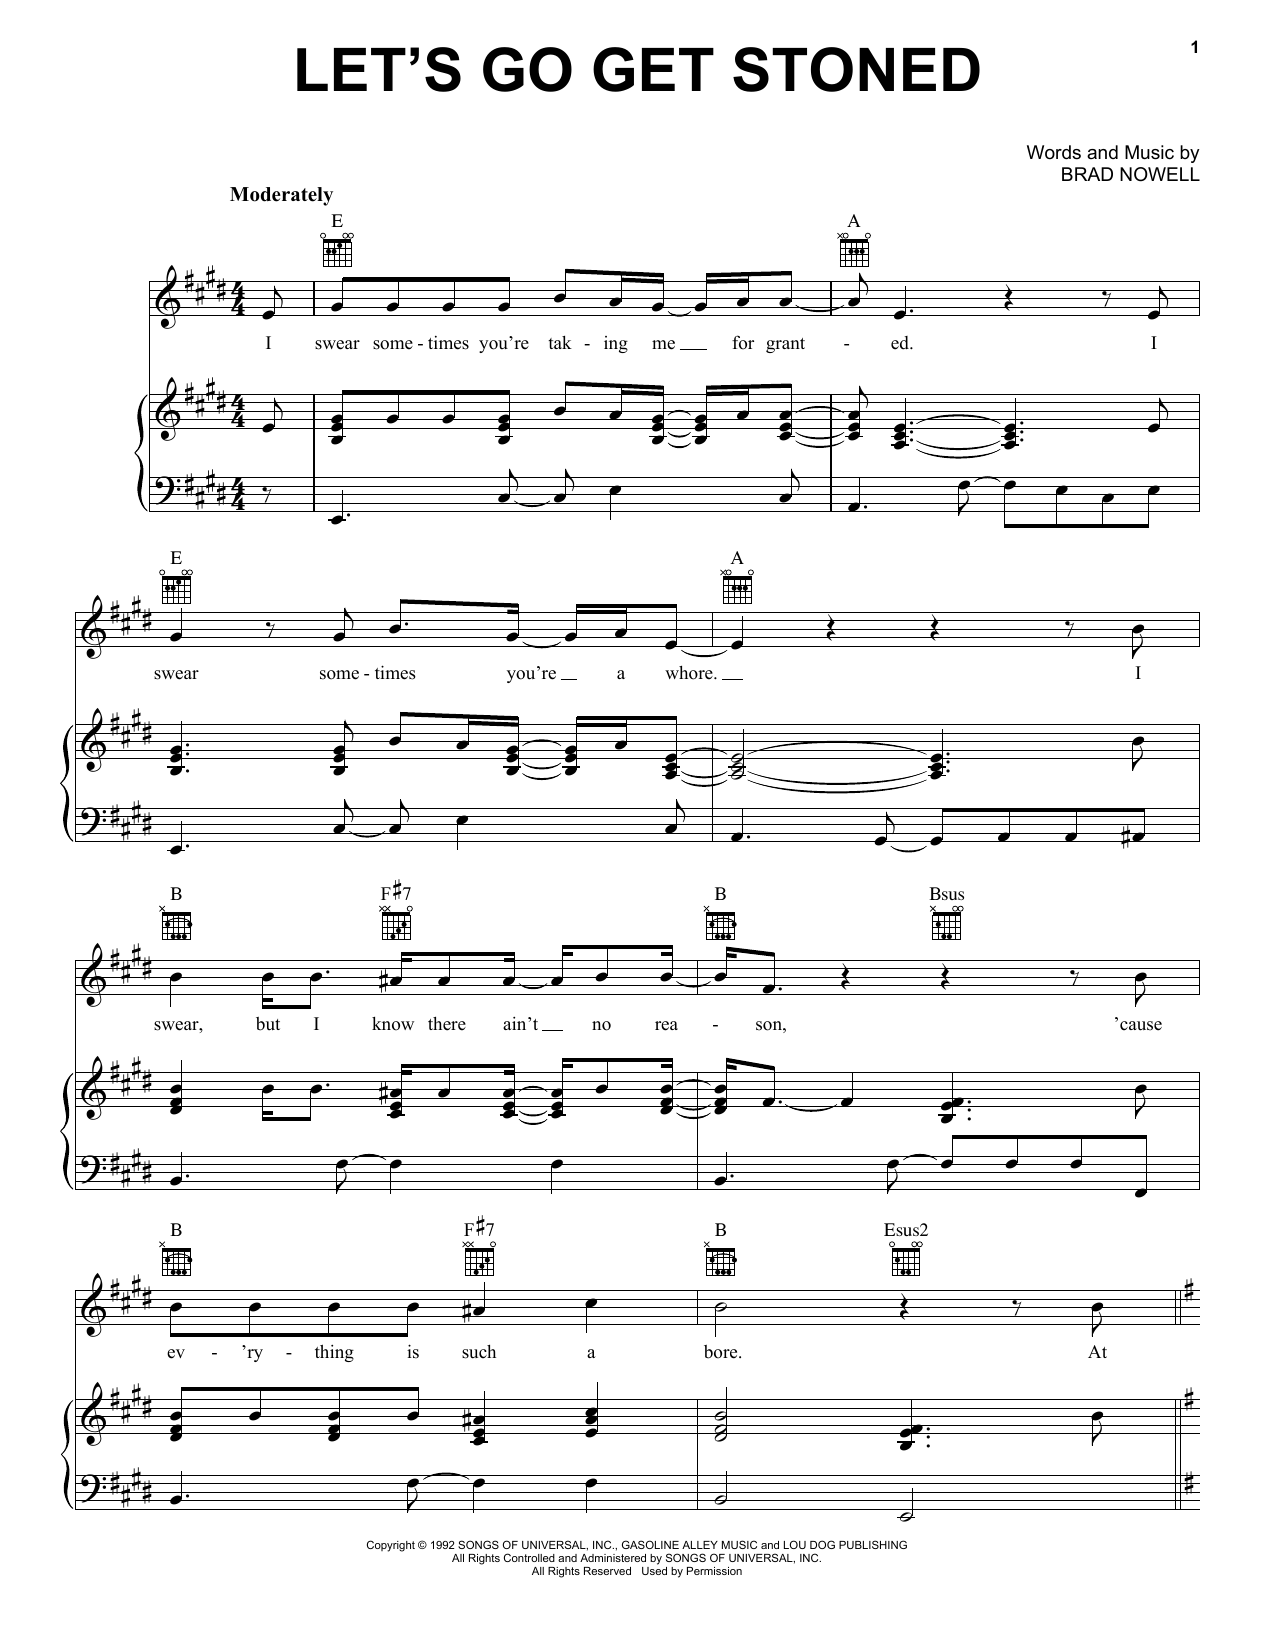 Sublime Let's Go Get Stoned Sheet Music Notes & Chords for Ukulele - Download or Print PDF